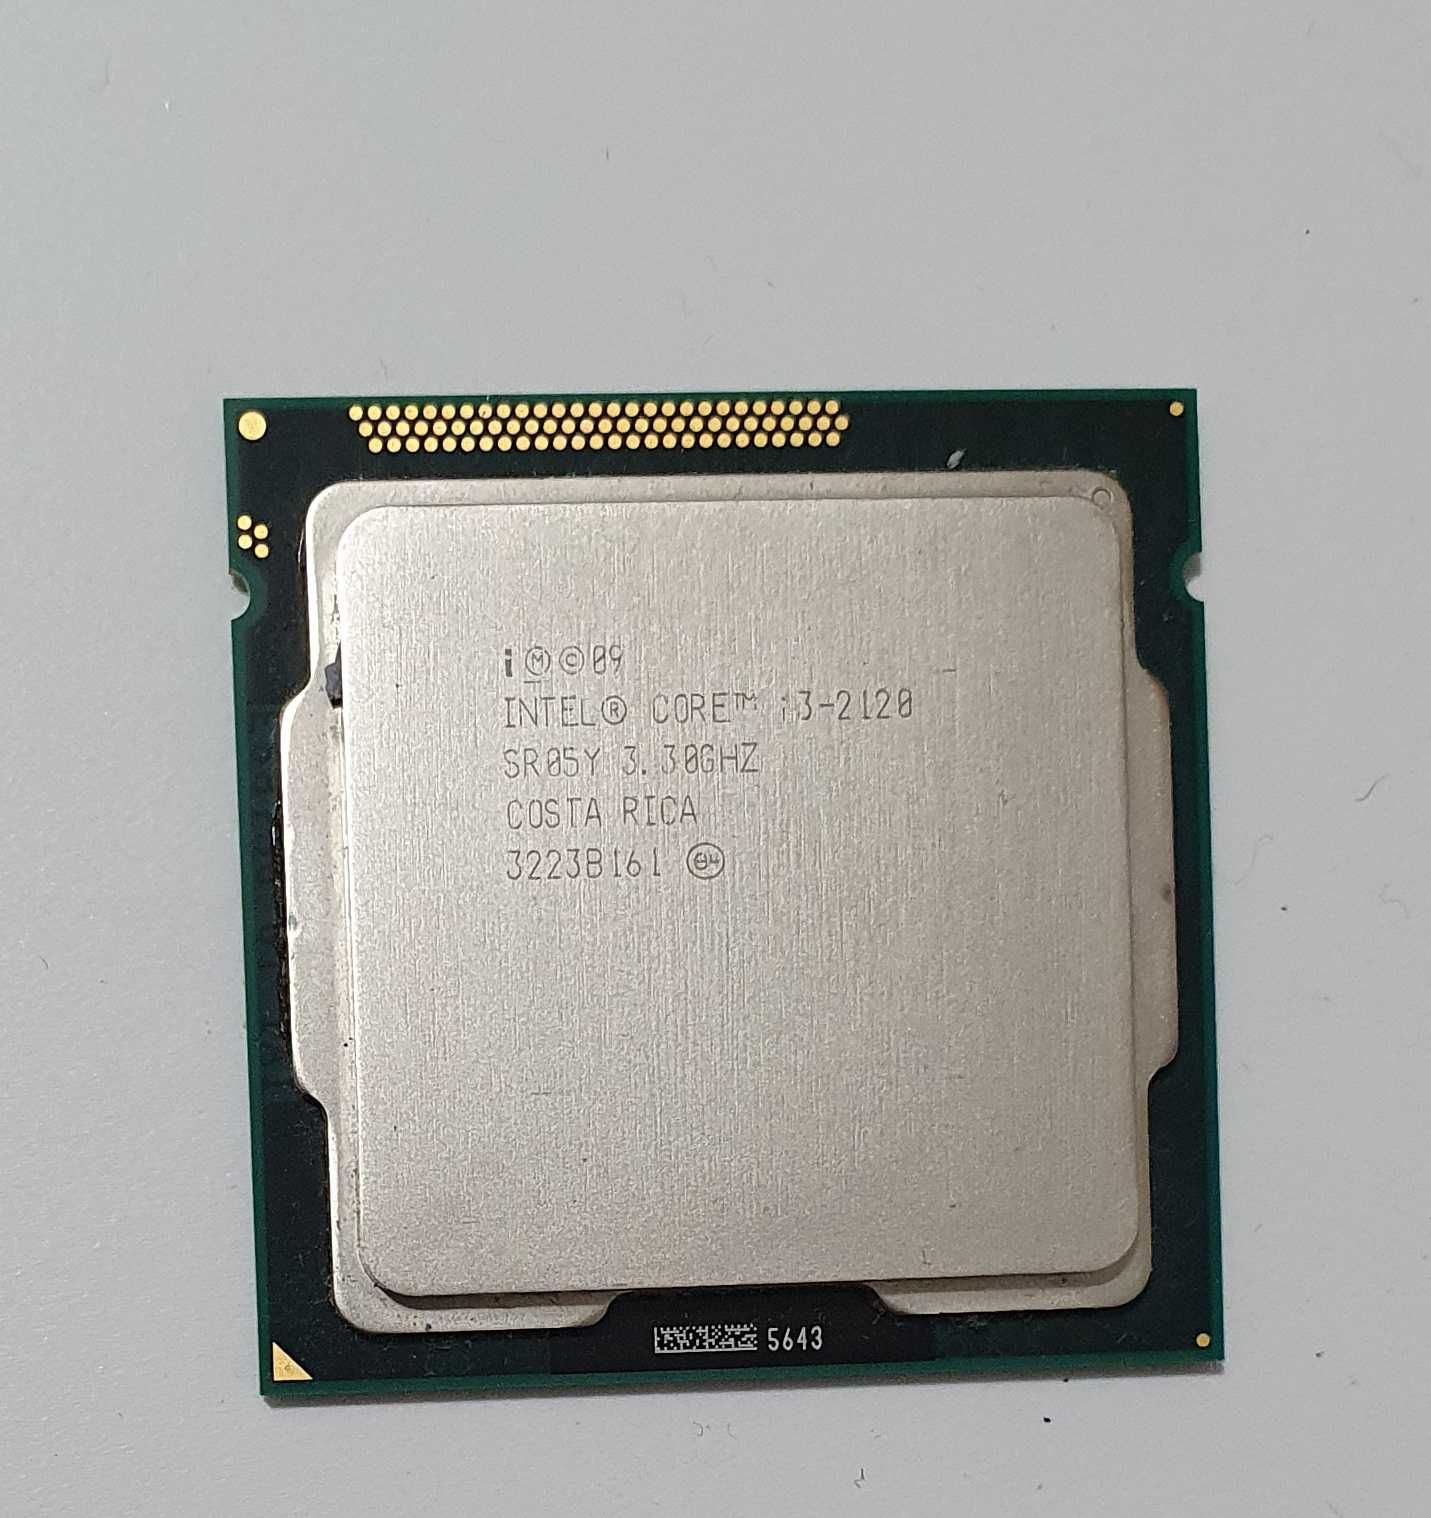 Procesor Intel® Core i3-2120 3.30 GHz